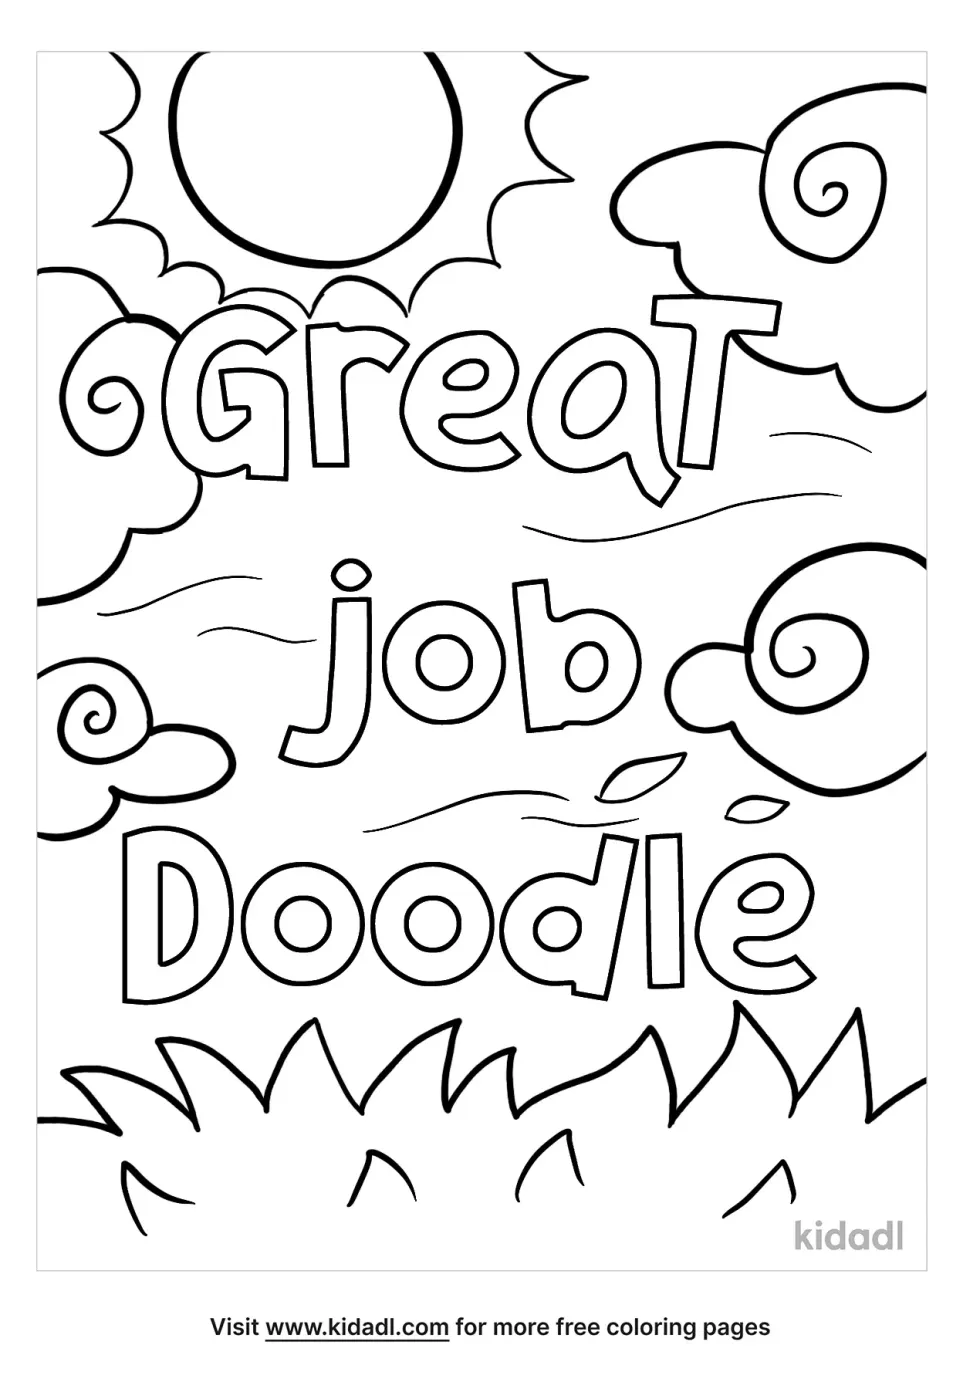 Great Job Doodle